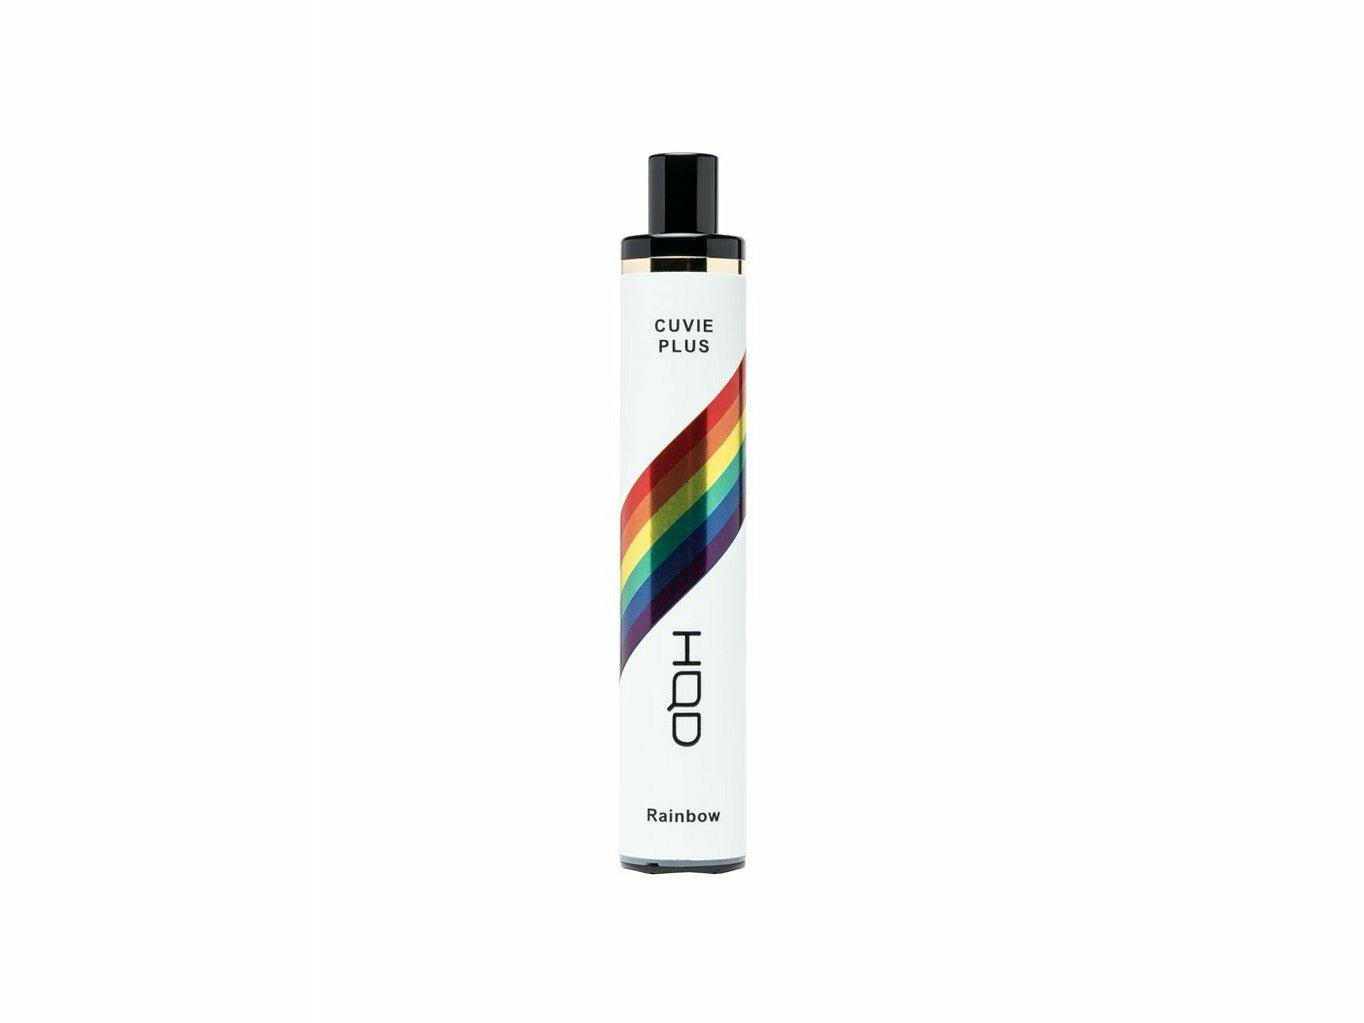 HQD Cuvie Plus Rainbow Flavor disposable vape device